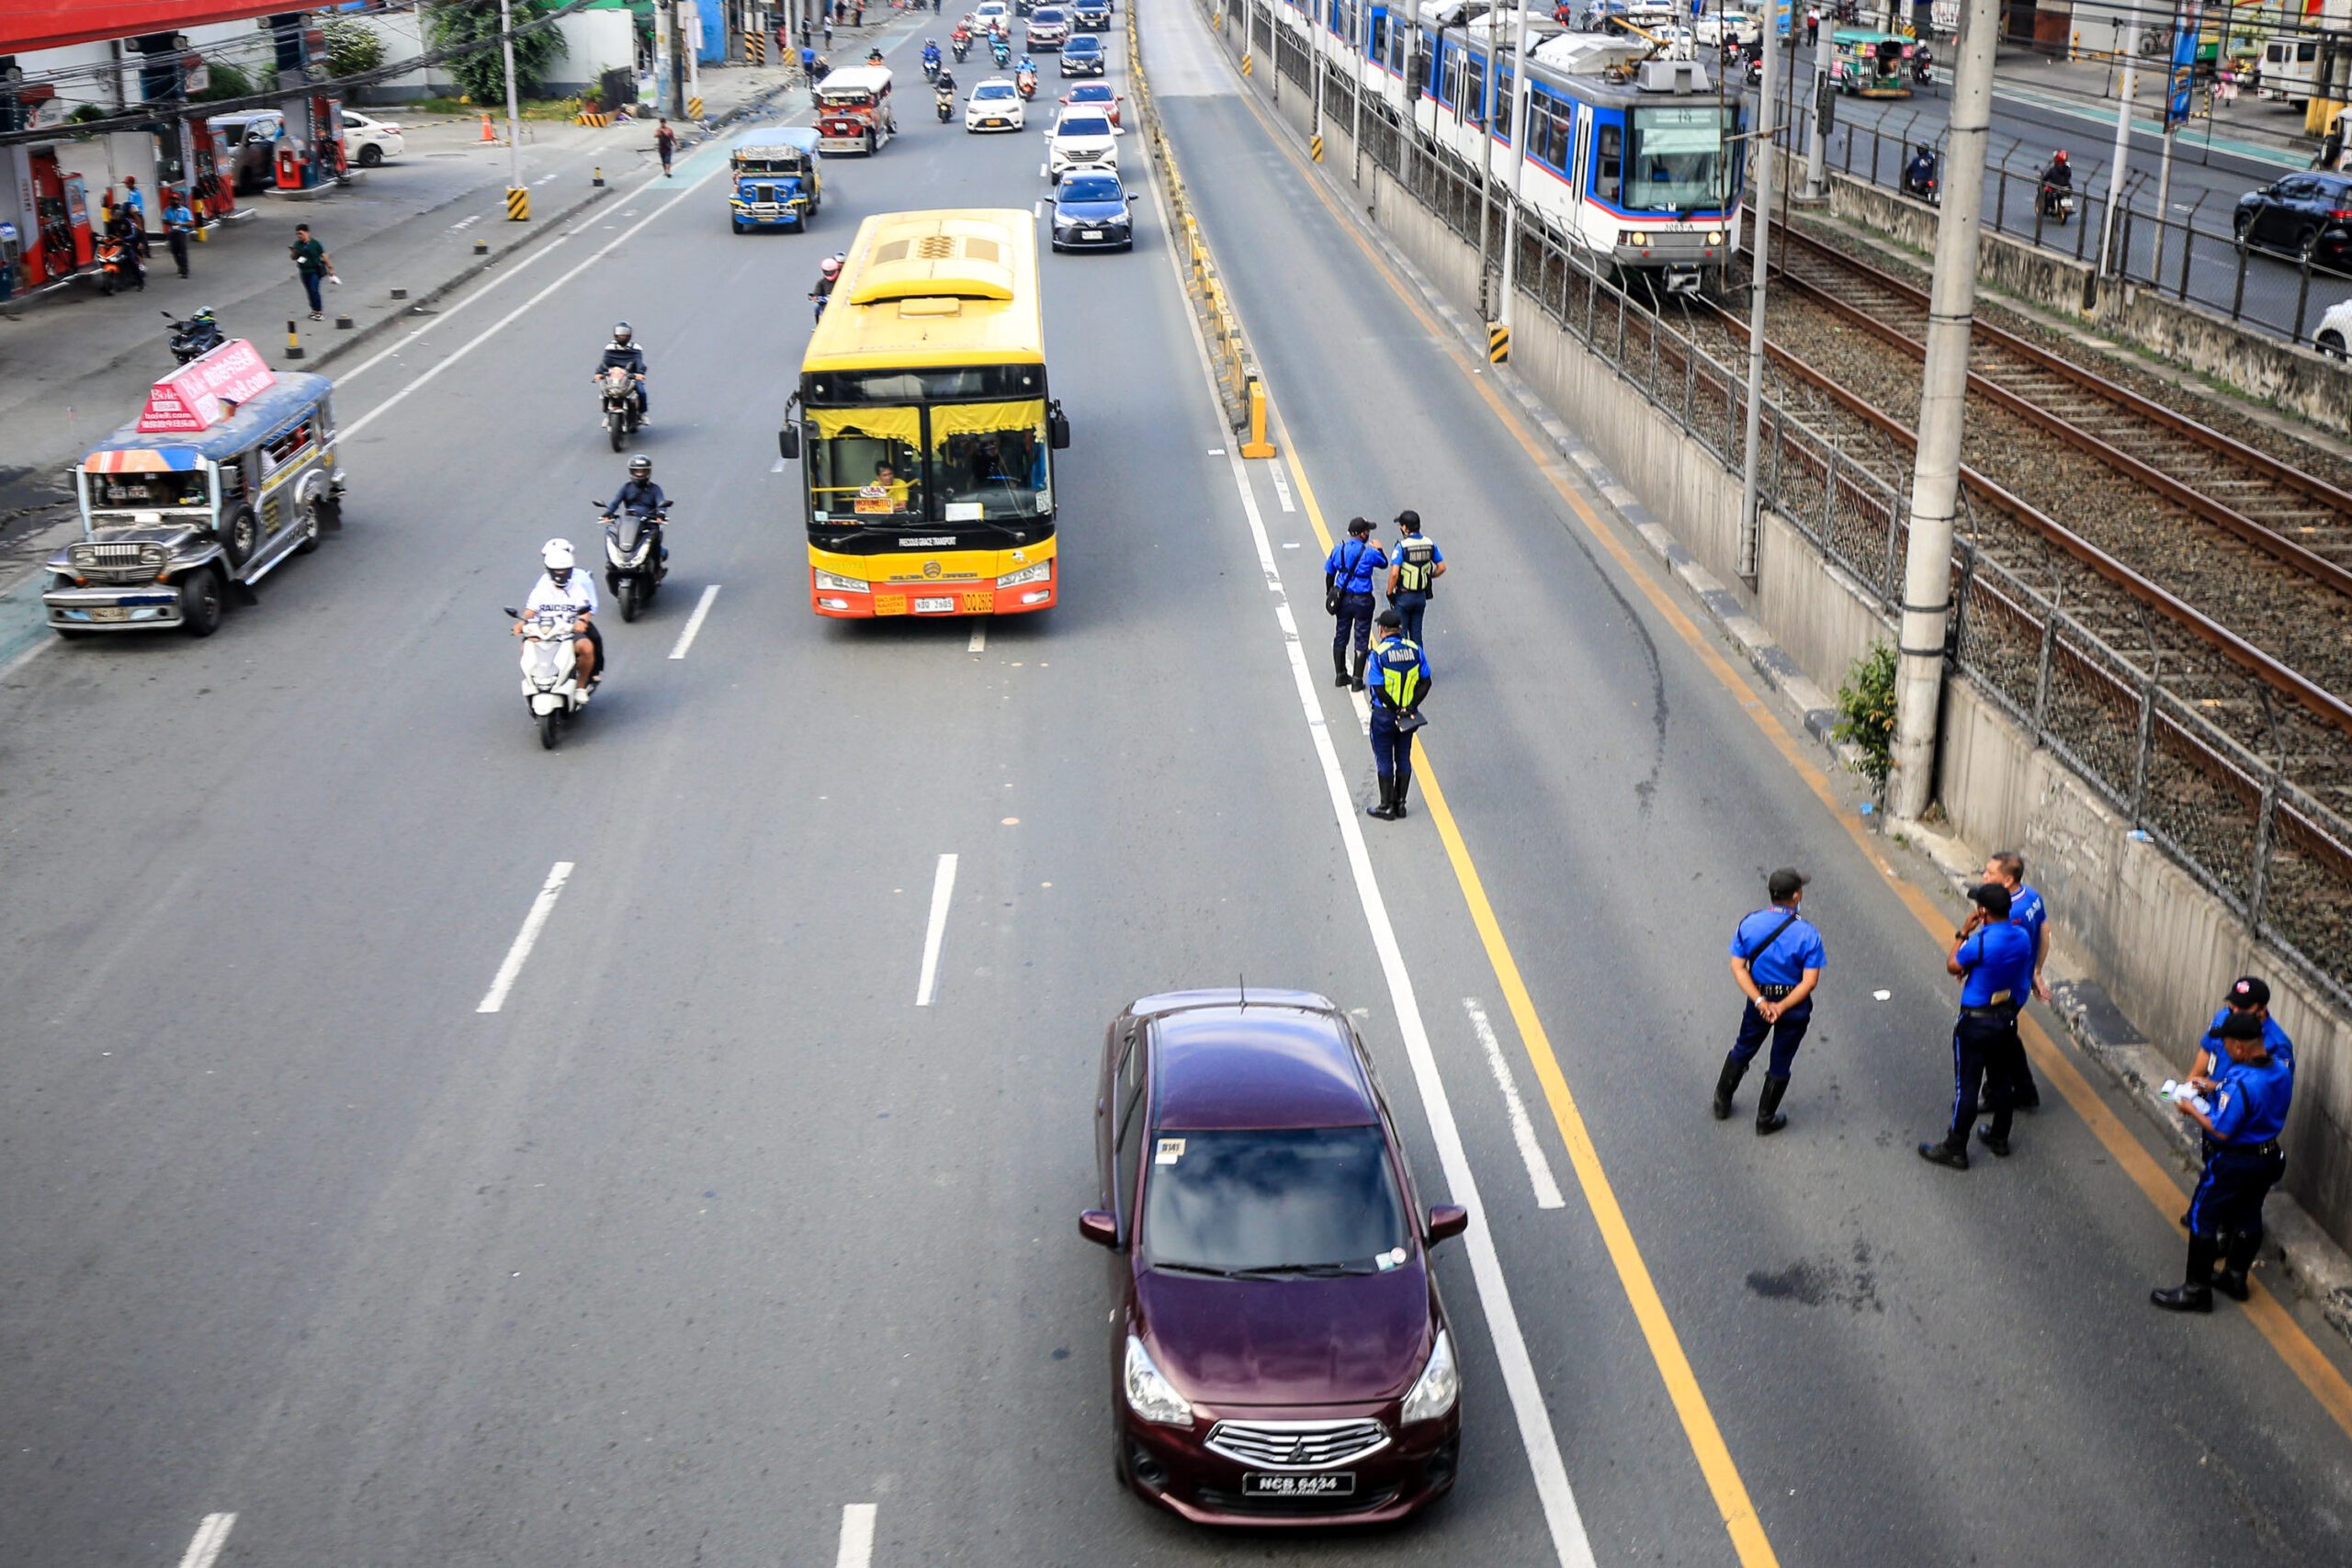 Who’s next? Chiz Escudero is latest politician to apologize for improper use of EDSA bus lane